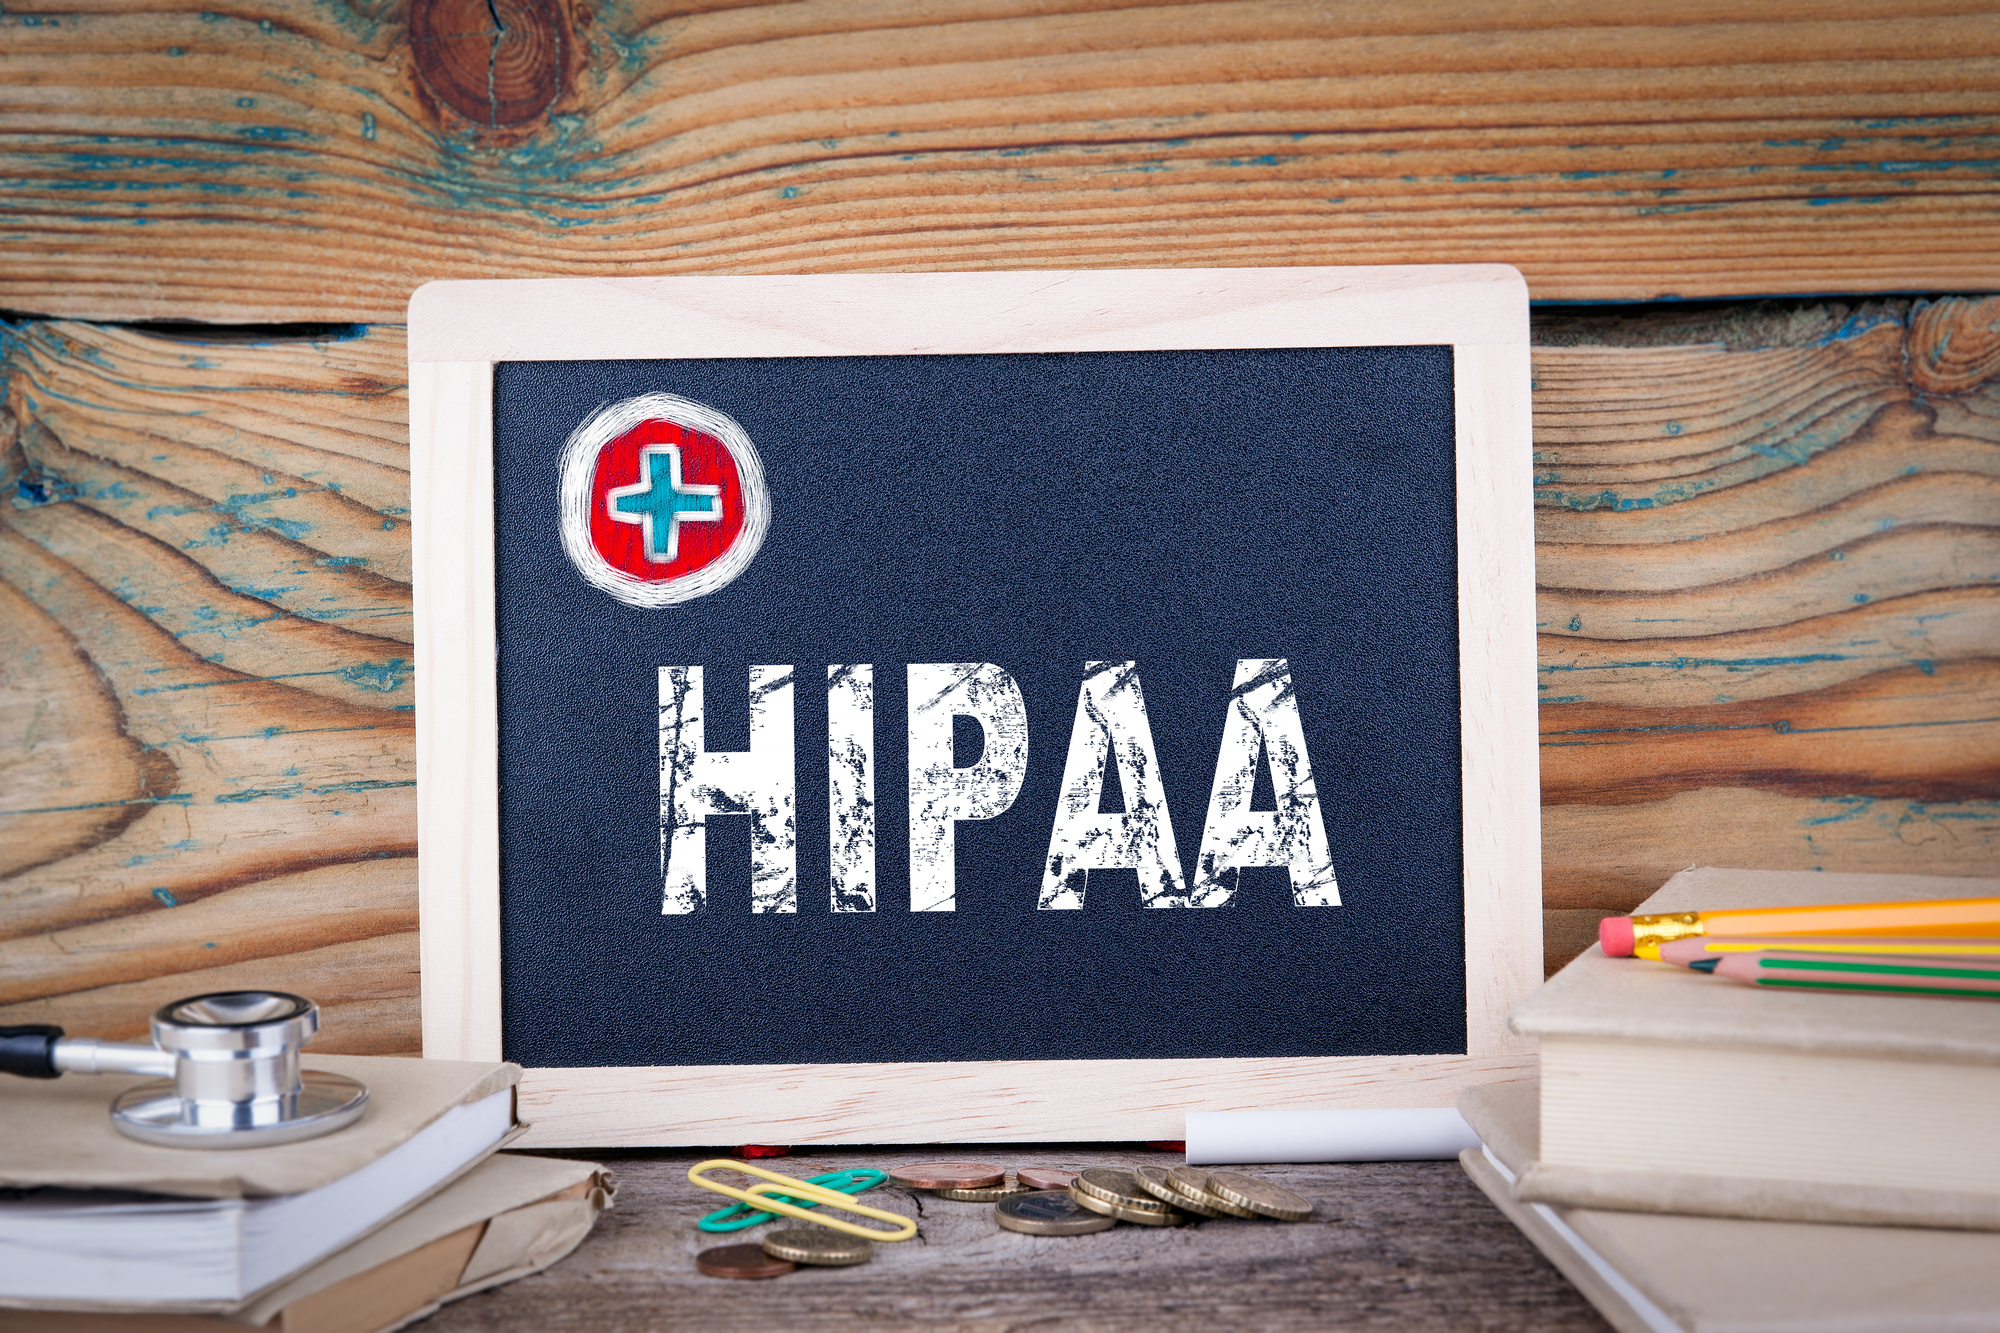 HIPAA Compliant Cloud Environment